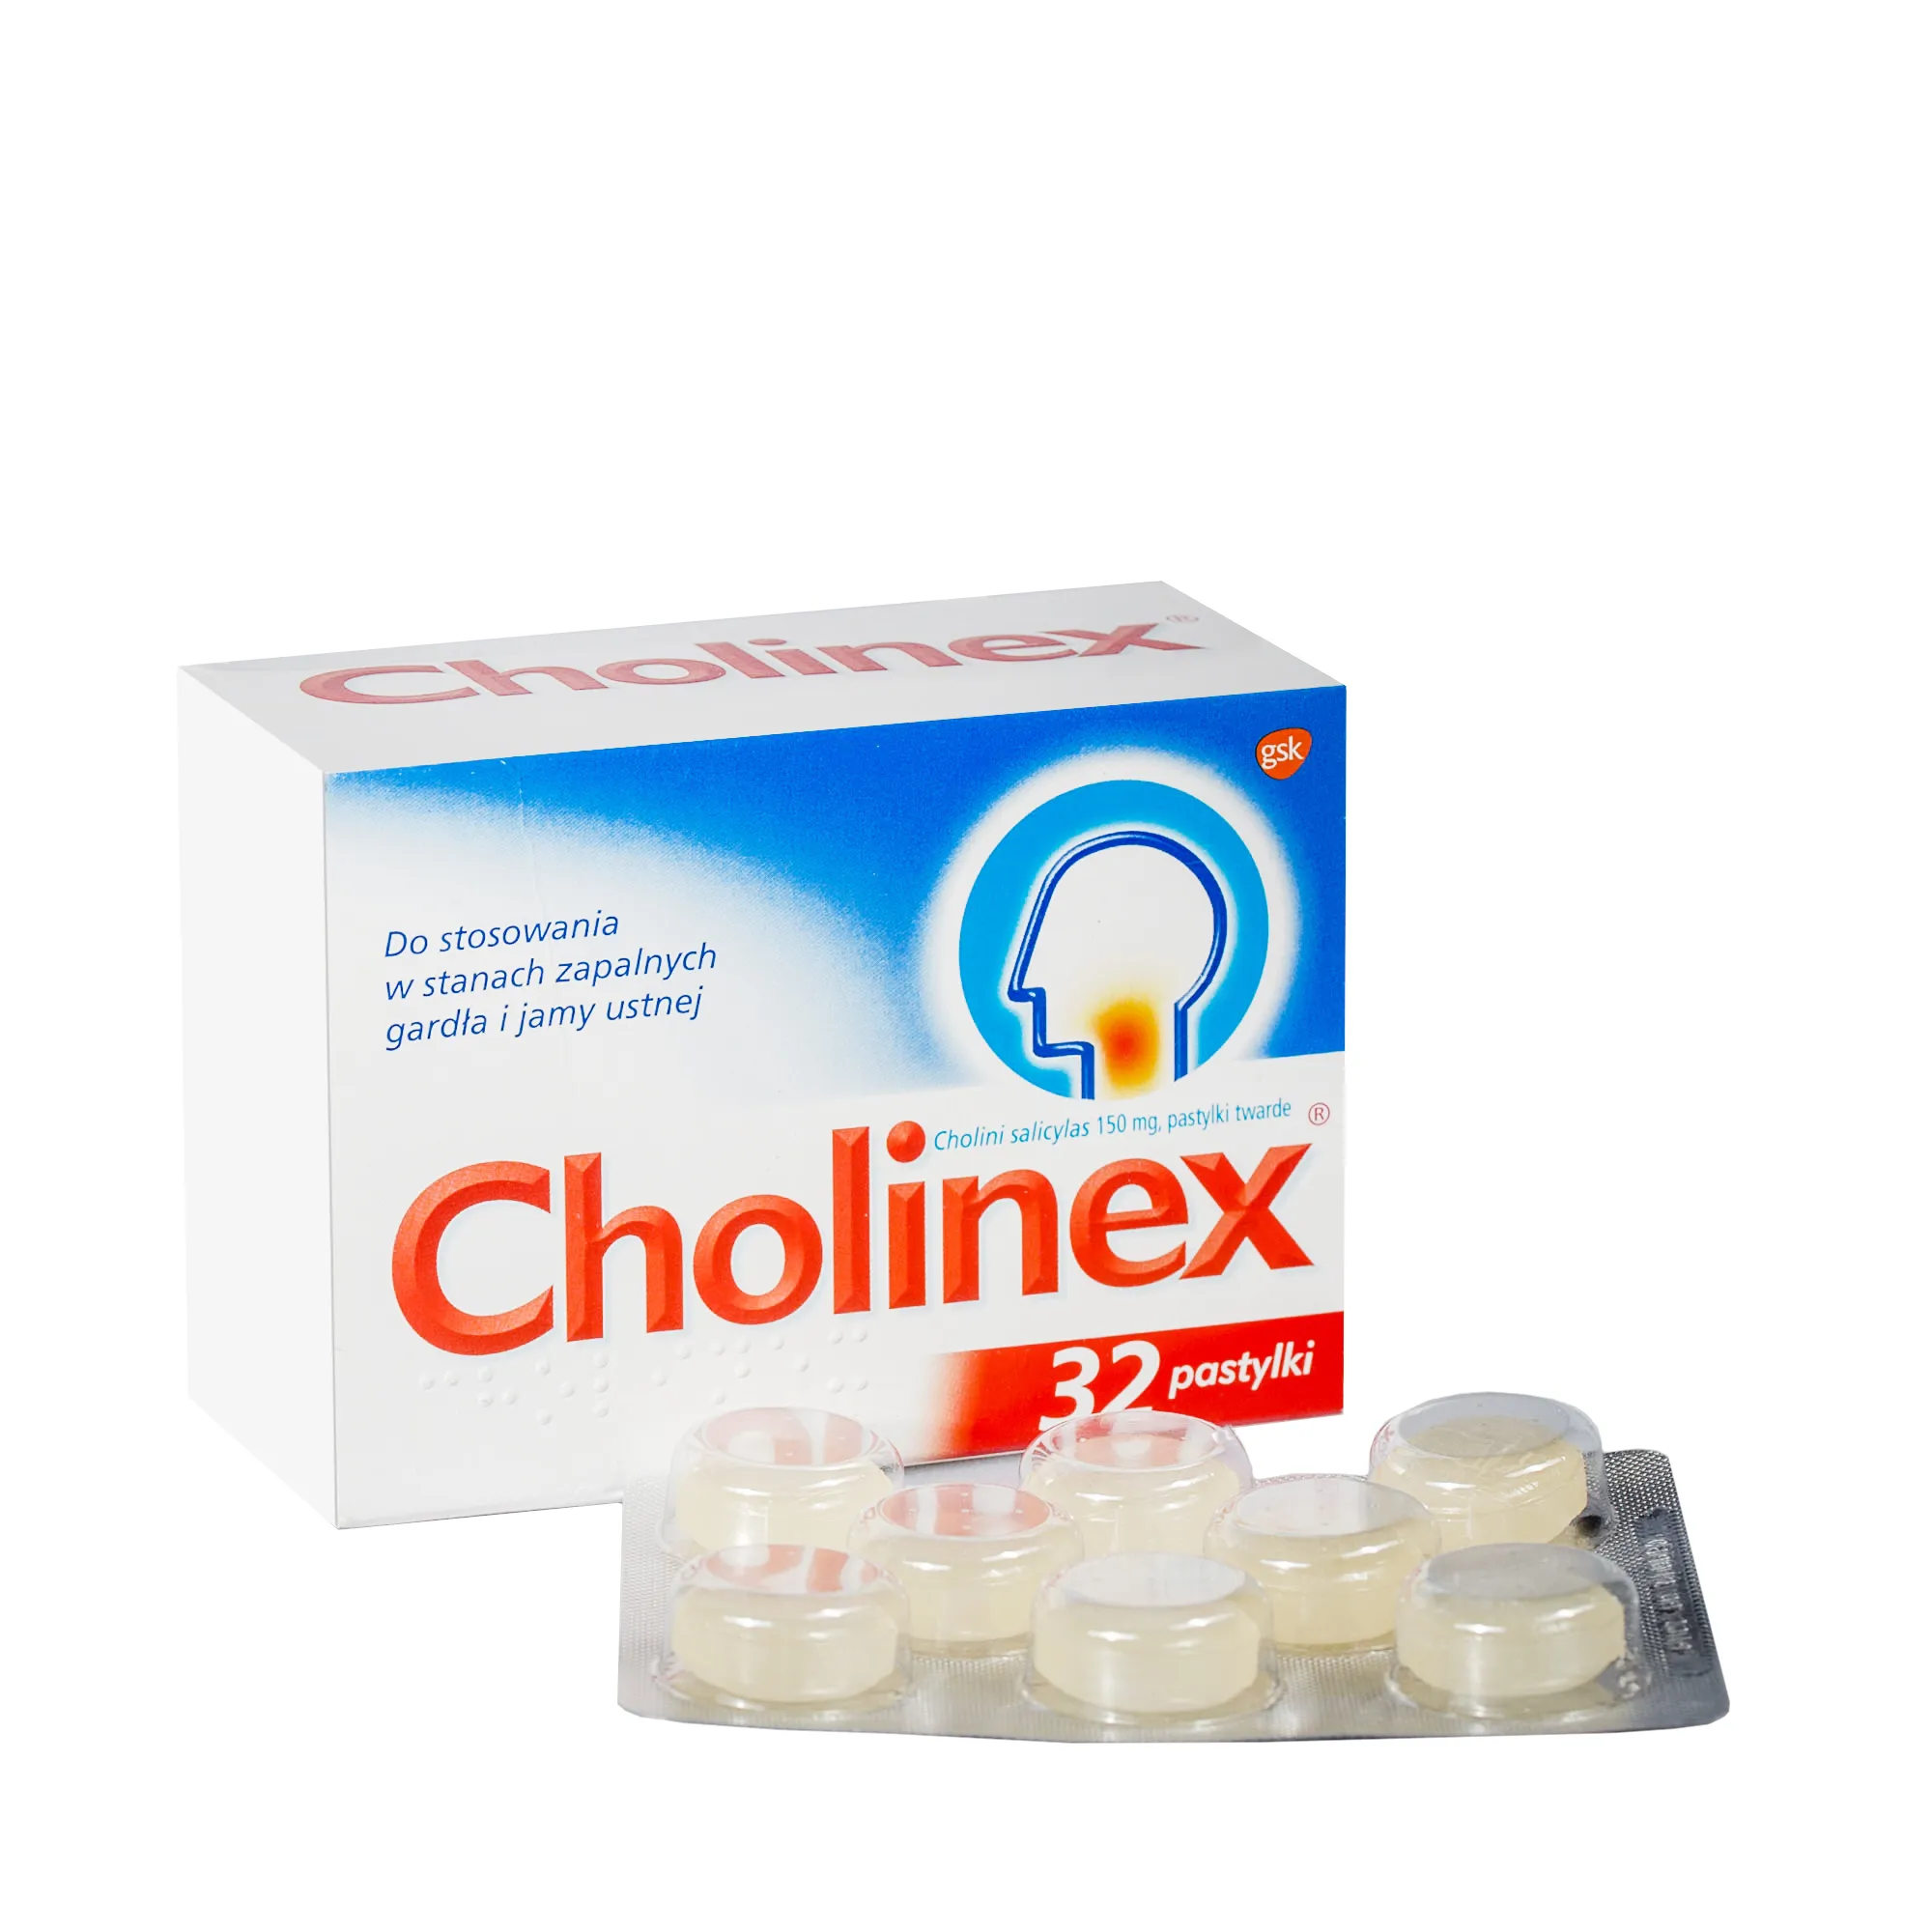 Cholinex 150 mg, 32 pastylki twarde